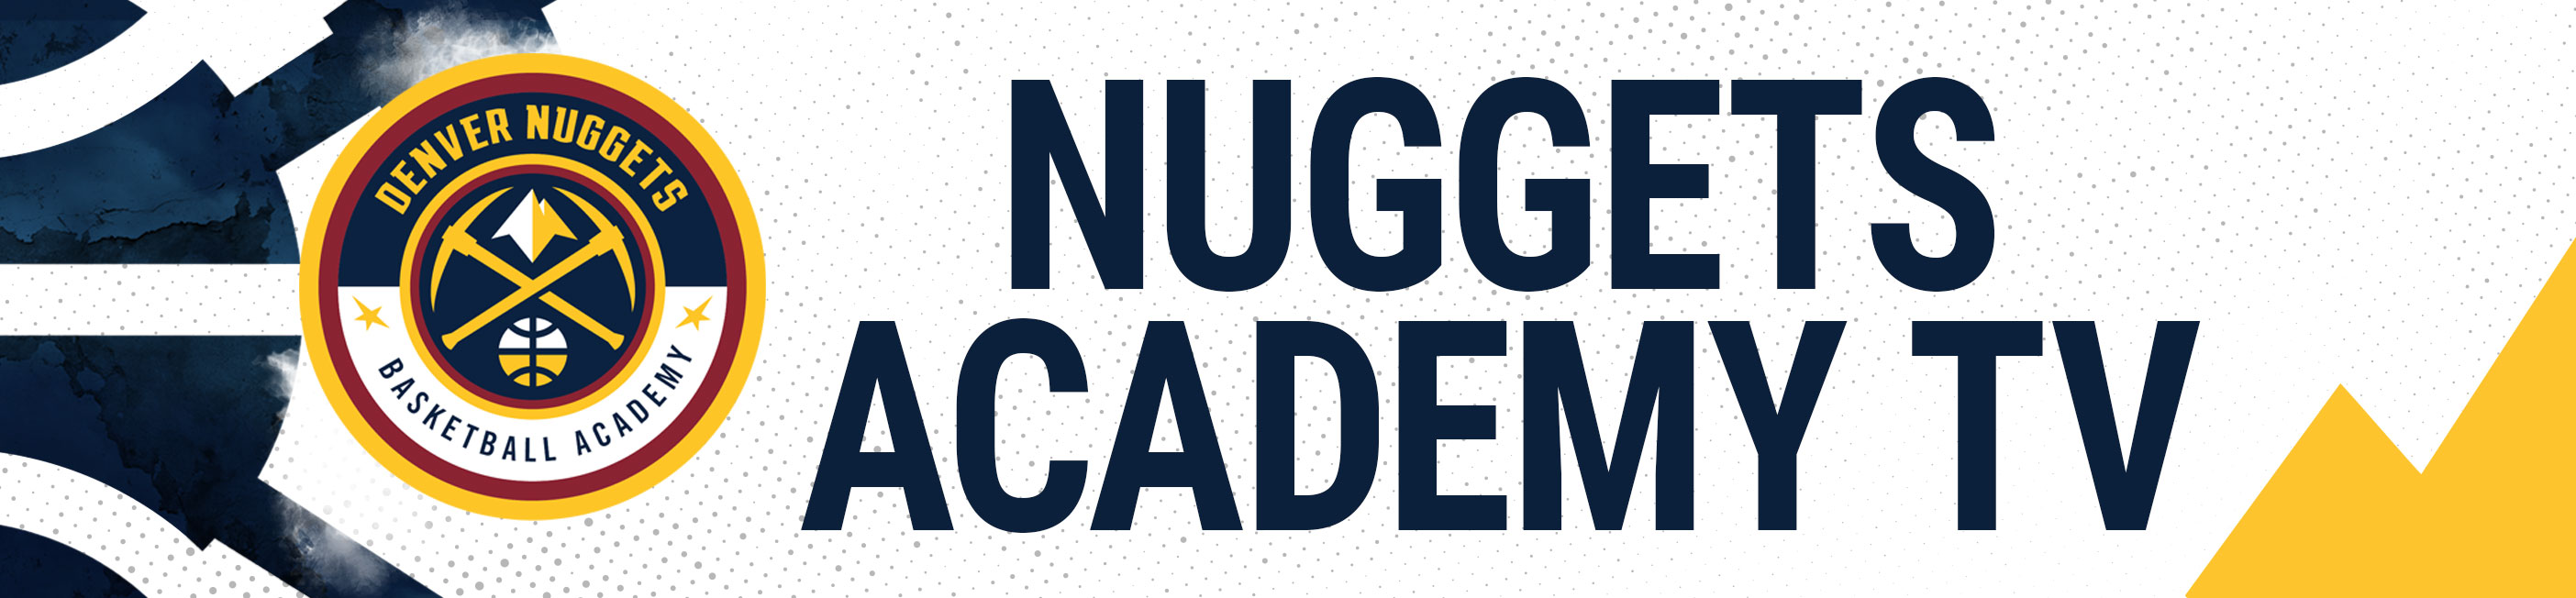 Nuggets Academy TV